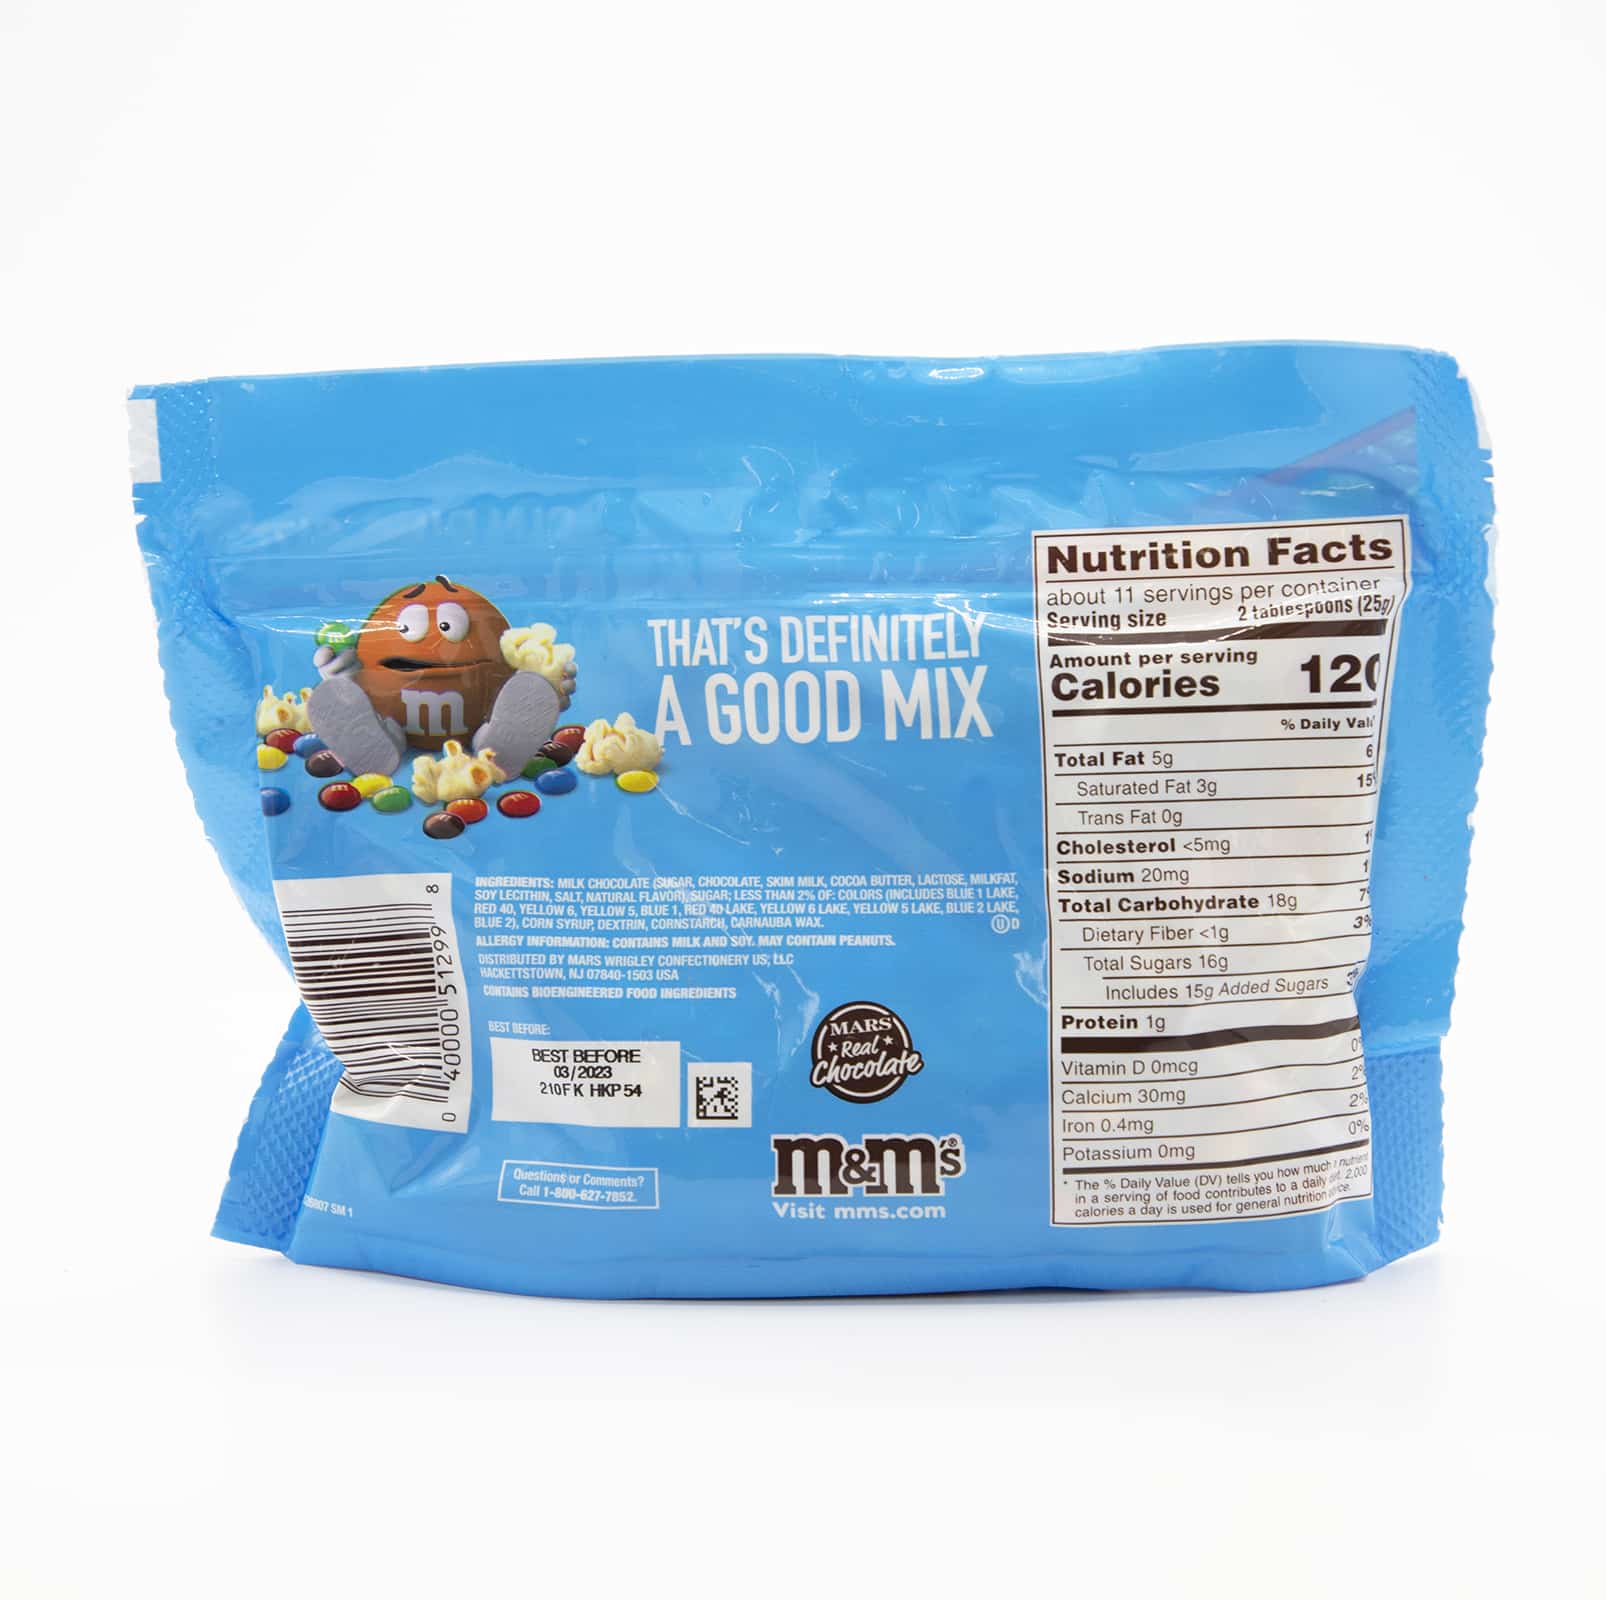 M&M'S Milk Chocolate Minis Candy Sharing Size Bag, 10.1 Oz